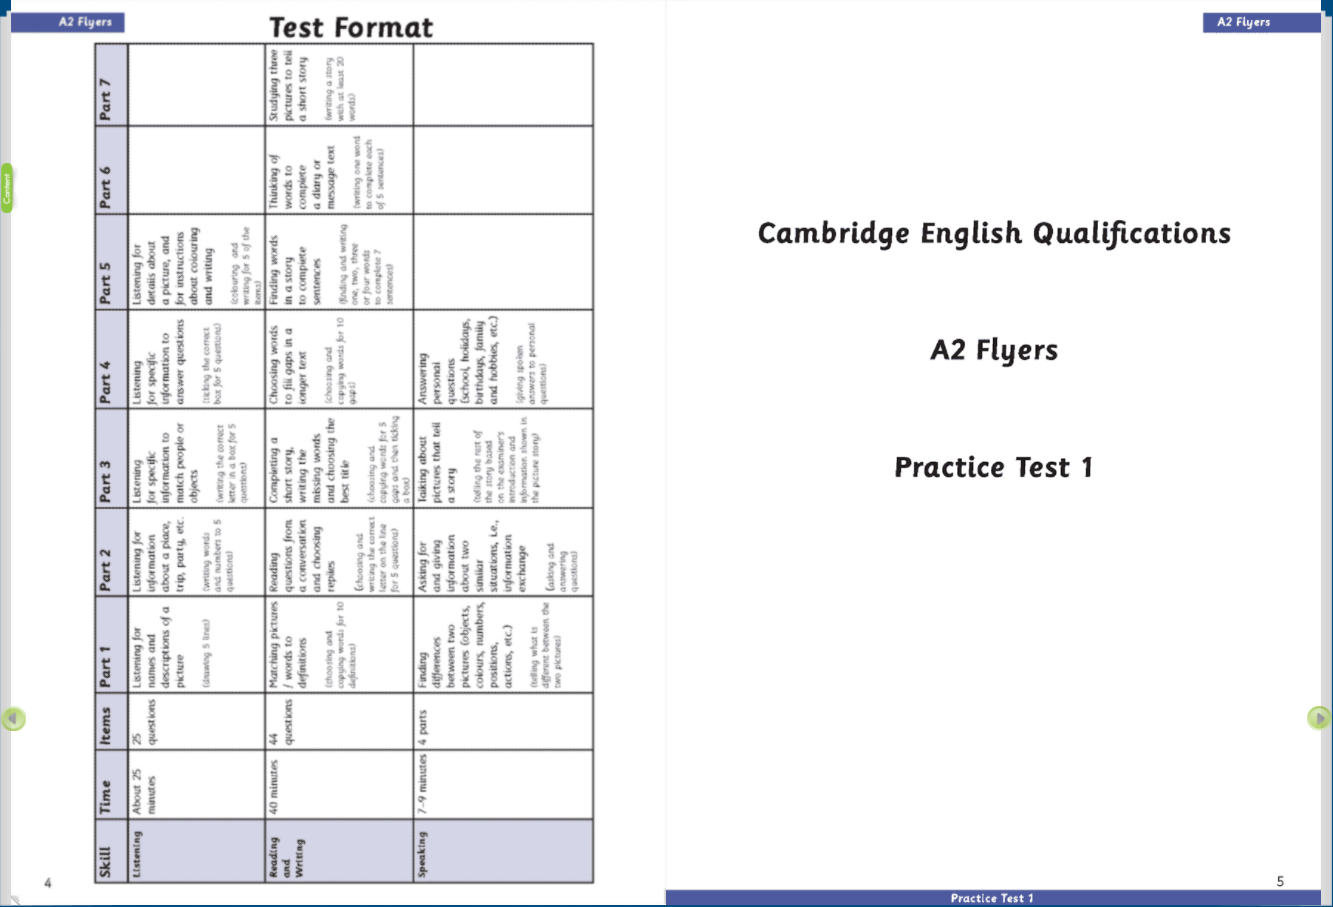 [E-BOOK] CYLET Practice Tests Pre A2 Flyers Sách mềm sách học sinh